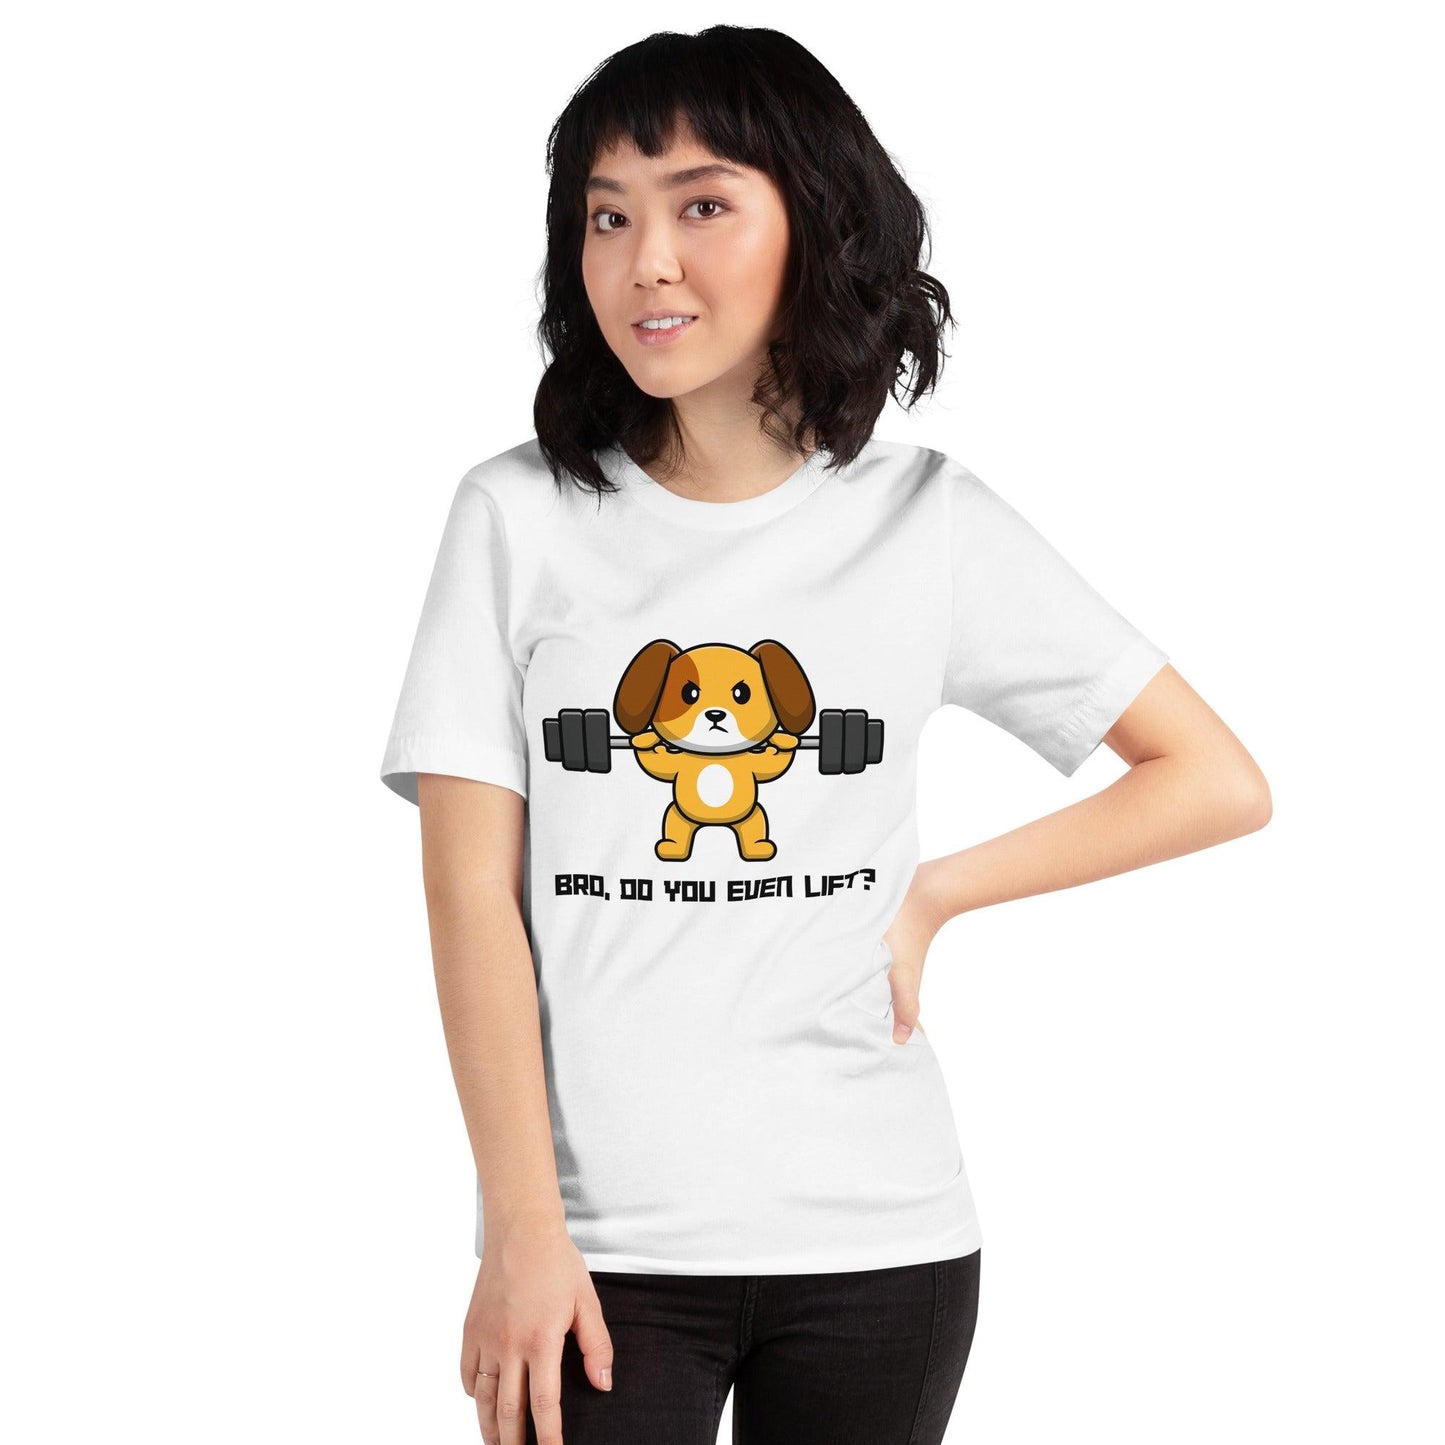 Premium Crew T-Shirt - Do You Even Lift - Dog